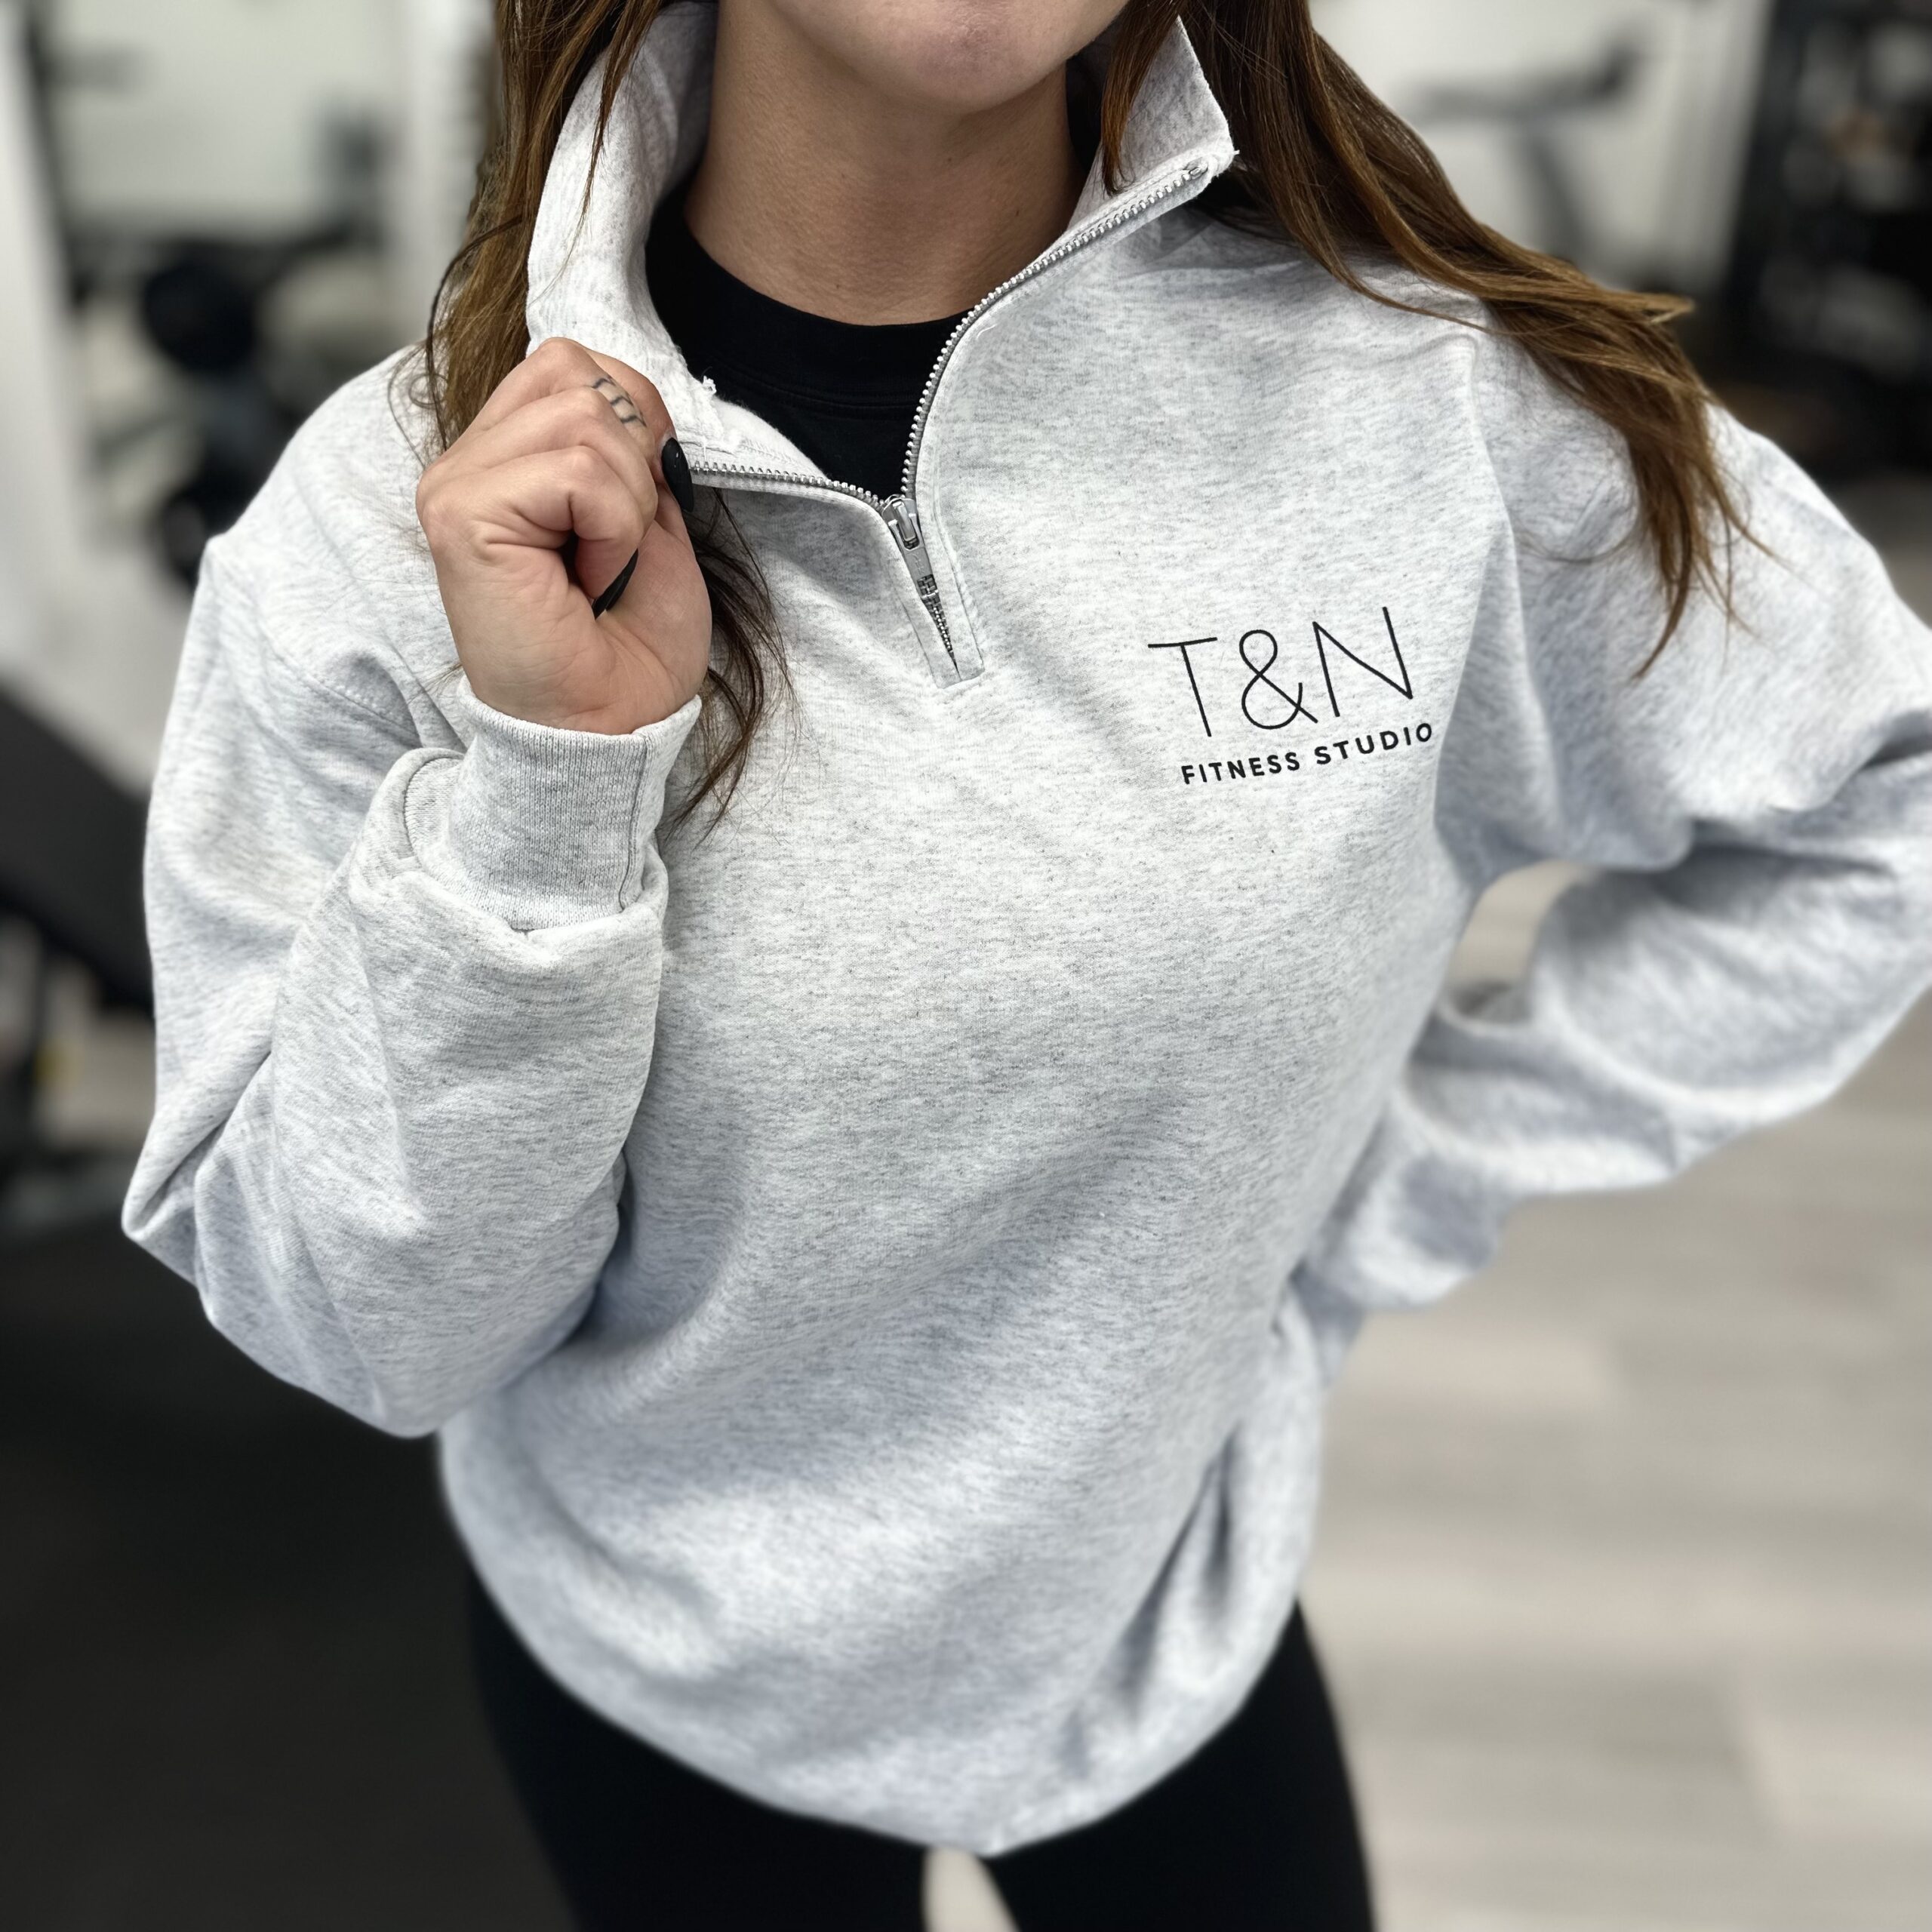 A woman in a fitness studio wearing a grey sweatshirt with merchandise